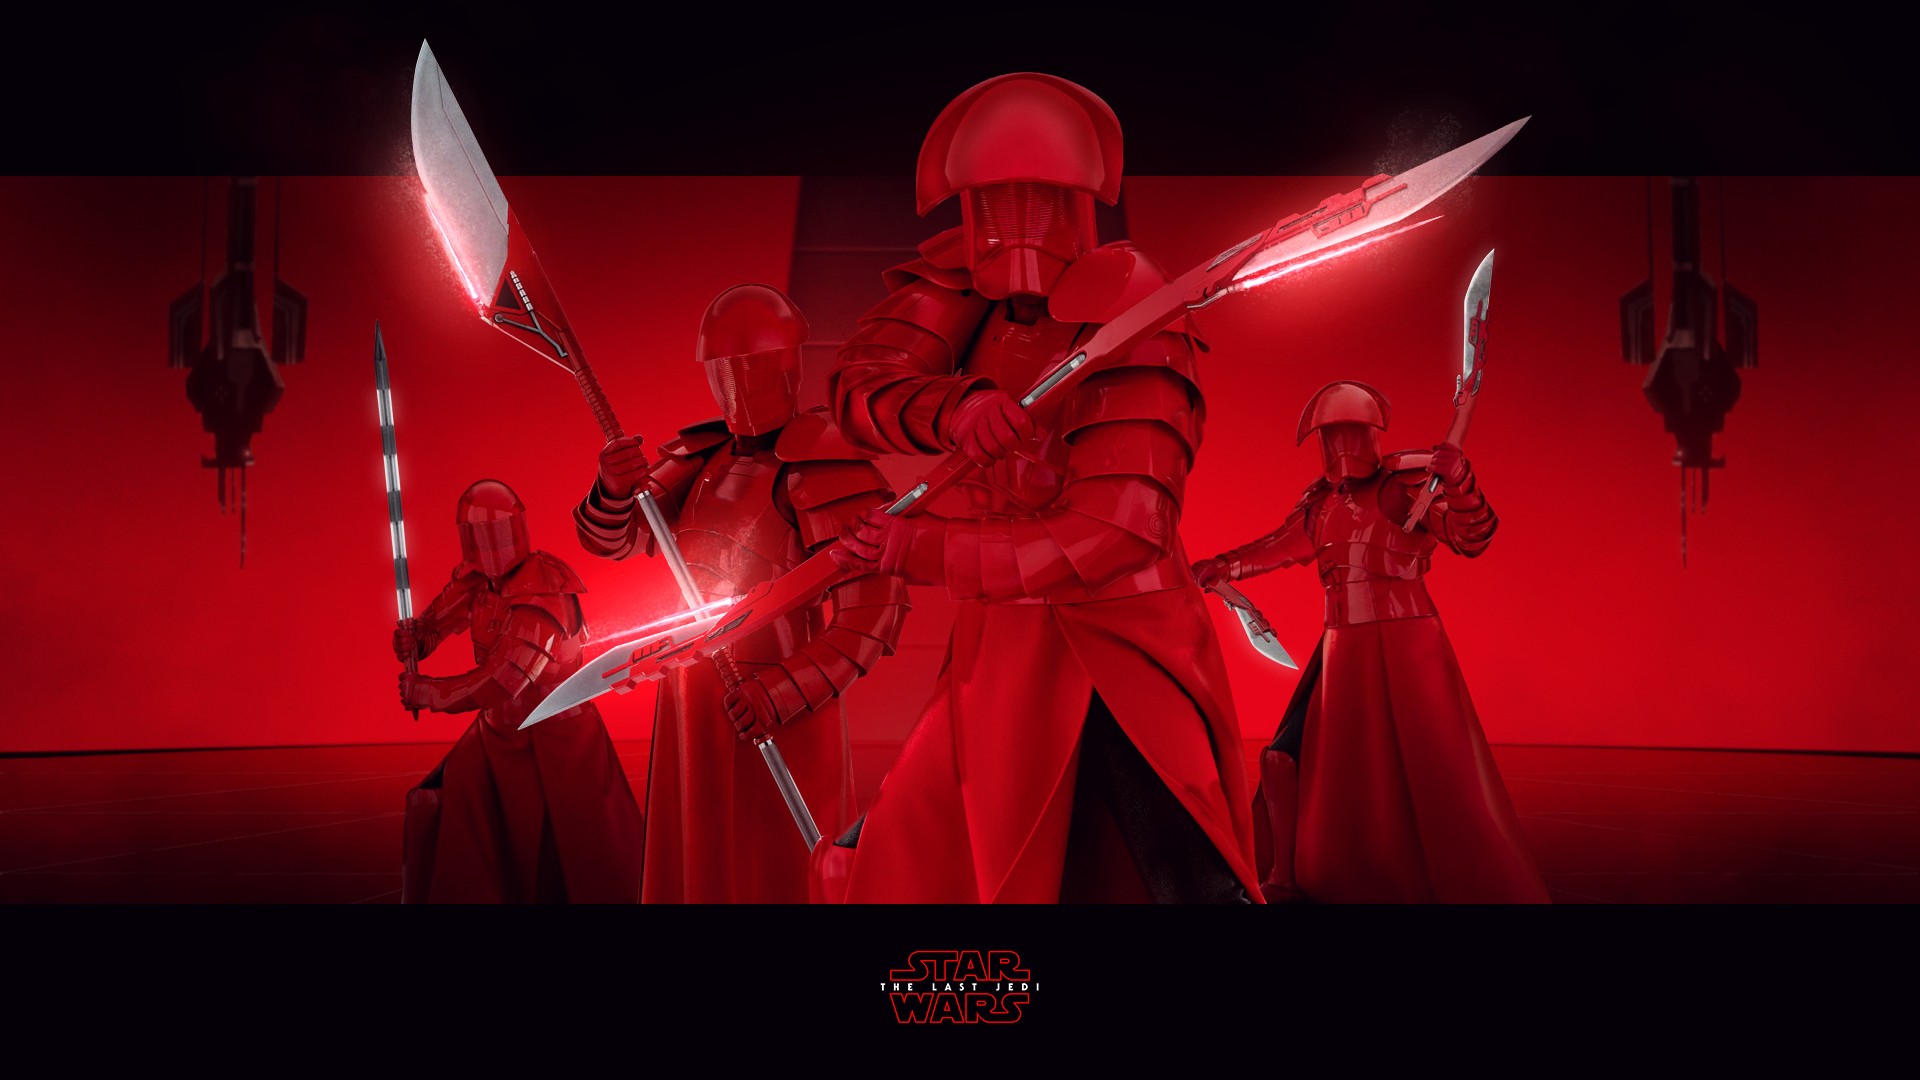 Star Wars, Star Wars: The Last Jedi, Red, The First Order Wallpaper